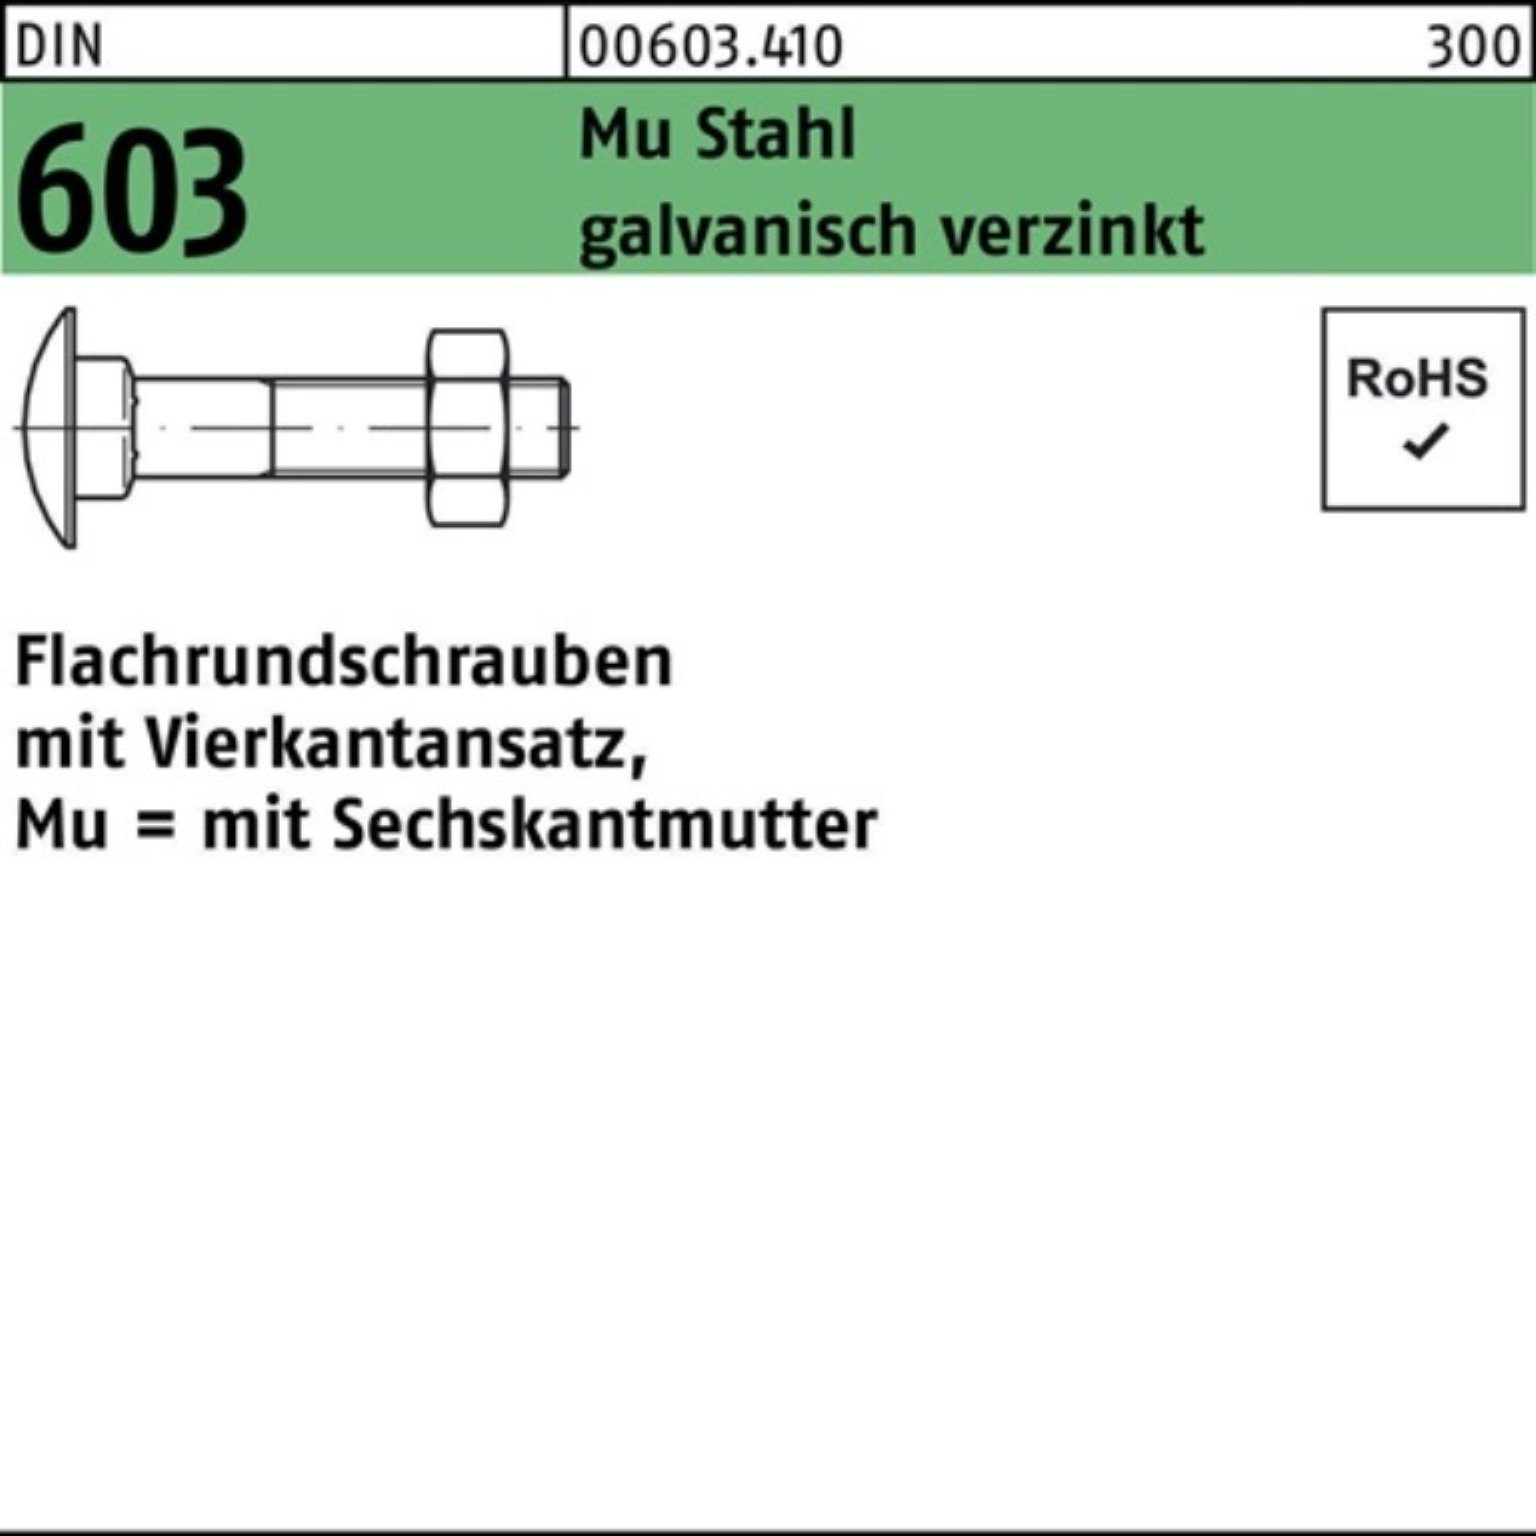 Reyher Schraube 100er Pack Flachrundschraube DIN 603 Vierkantansatz/6-ktmutter M20x200